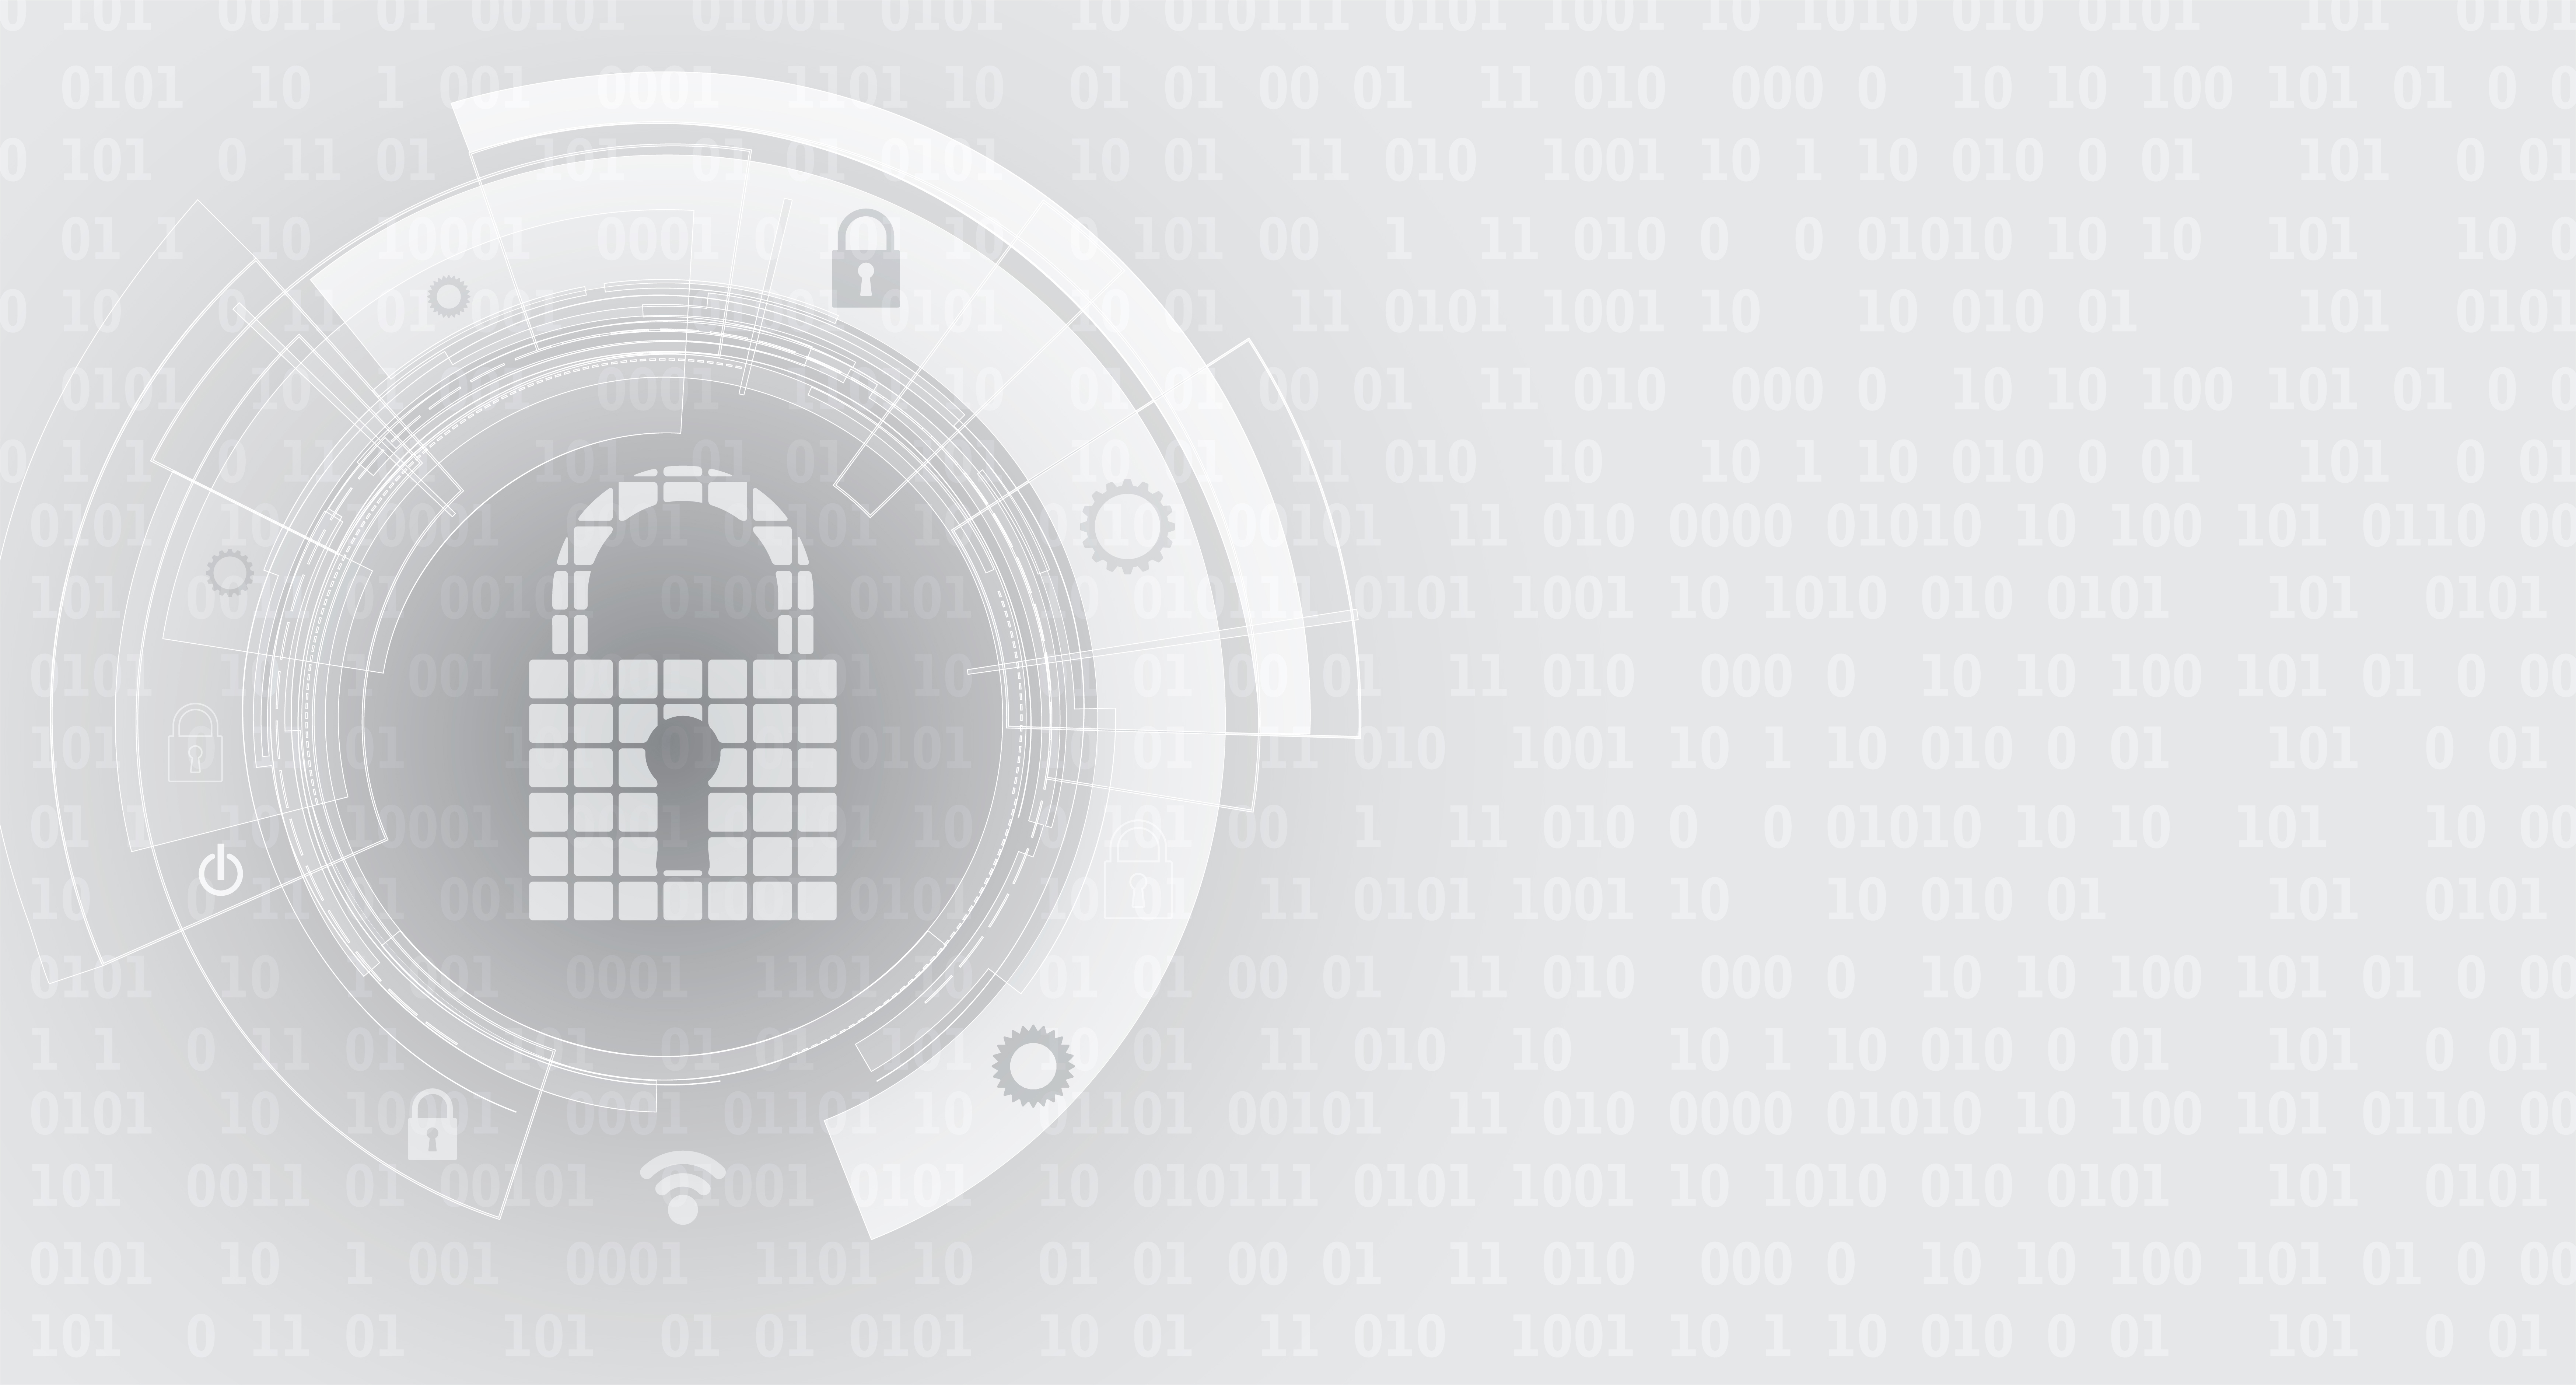 cybersecurity logo